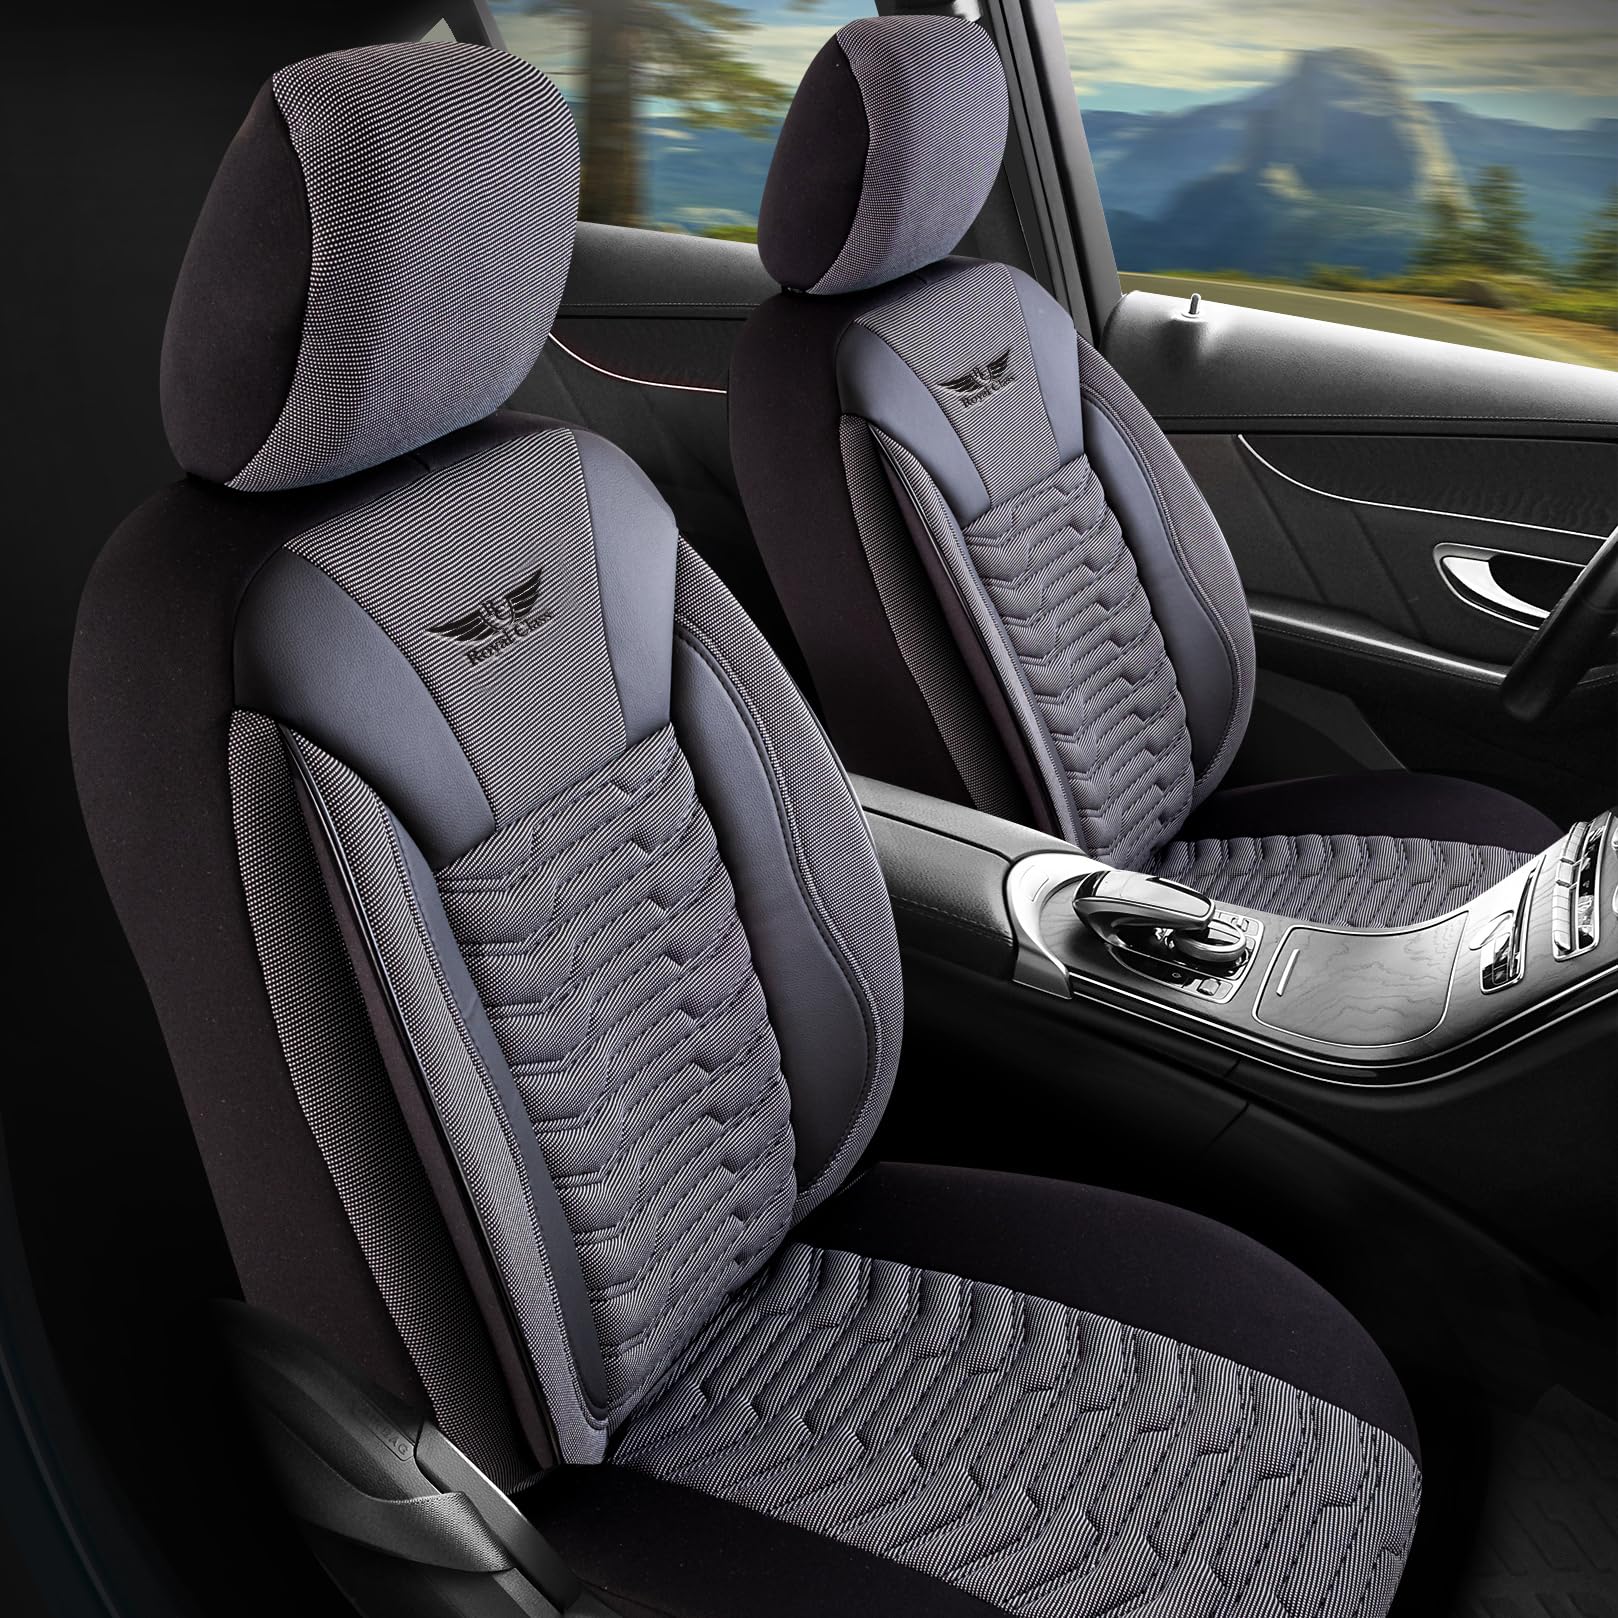 Royal Class Auto Sitzbezüge kompatibel für Hyundai ix20 in Dark Grau Komplett Fahrer und Beifahrer mit Rücksitzbank, Autositzbezug Schonbezug Sitzbezug Komplettset 5-Sitze Kunstleder von RC Royal Class